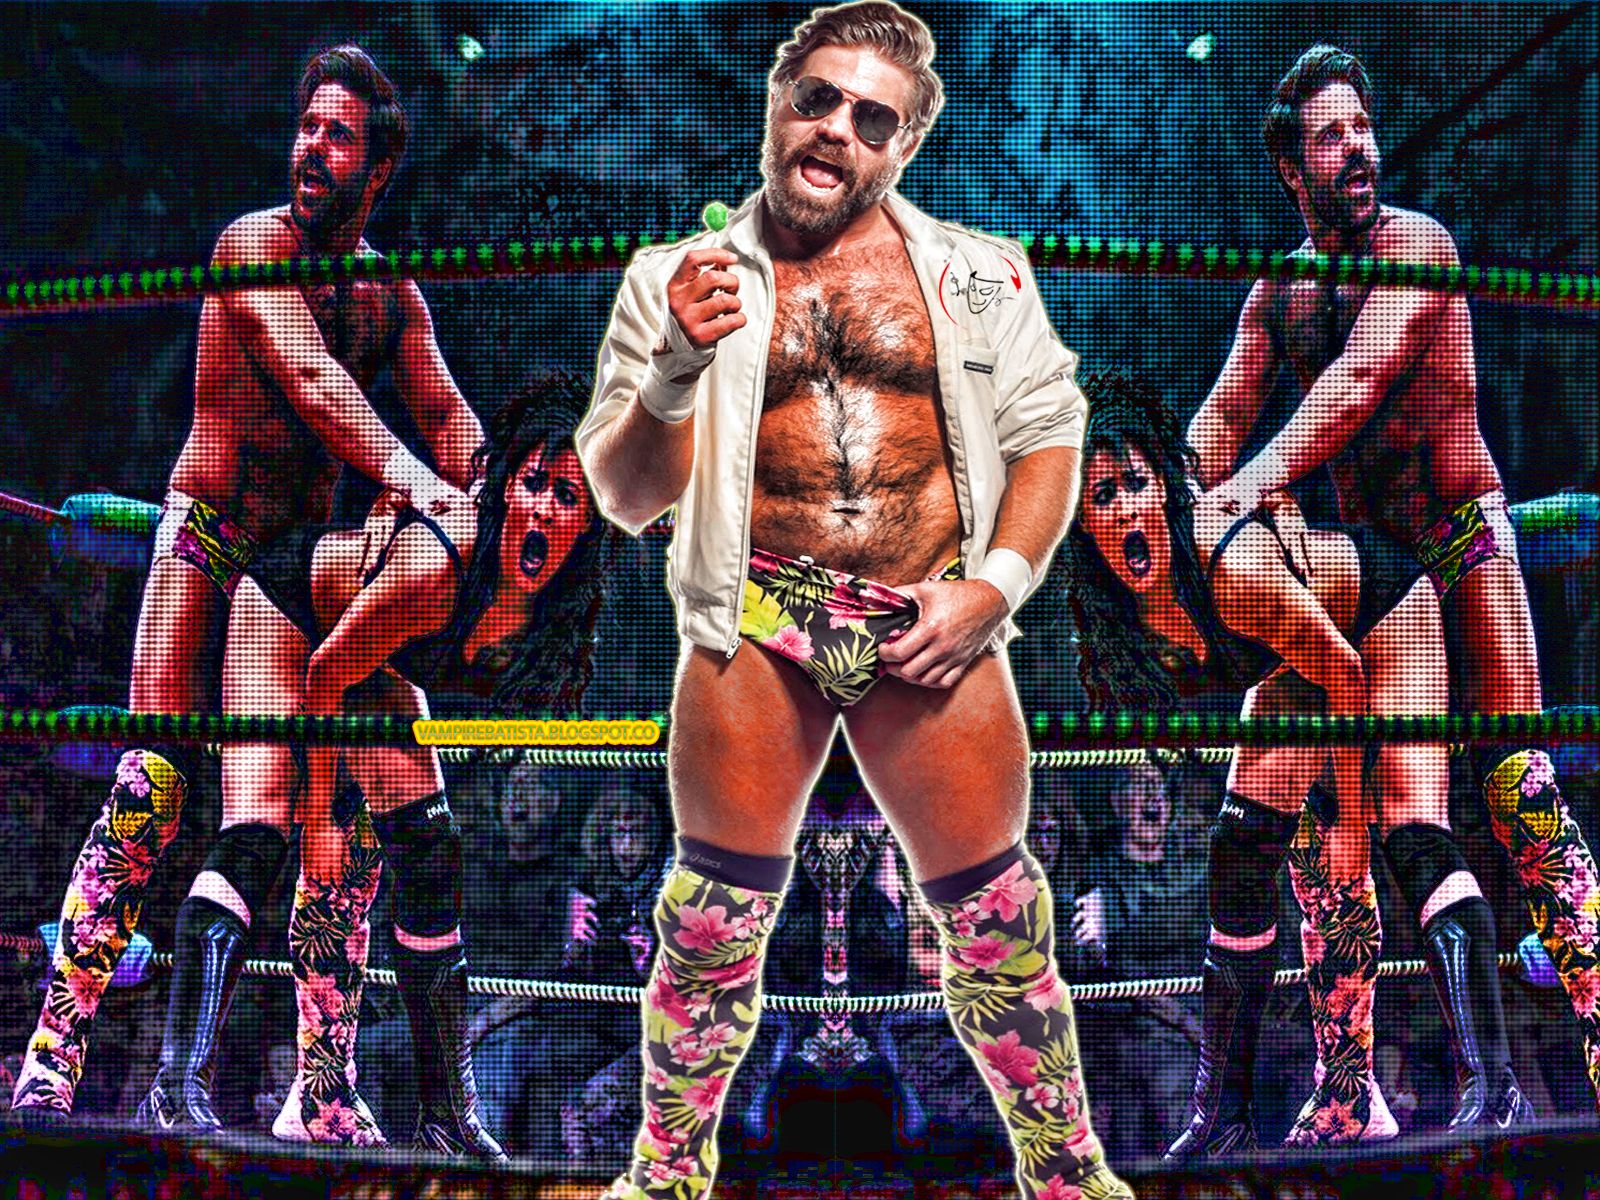 AEW, WWE, IMPACT, ROH, NJPW N Wrestler Wallpaper, Mobile WALLPAPERS(VAMPIREBATISTA.BLOGSPOT.COM): Lucha Underground, PWG & former TNA Joey Ryan